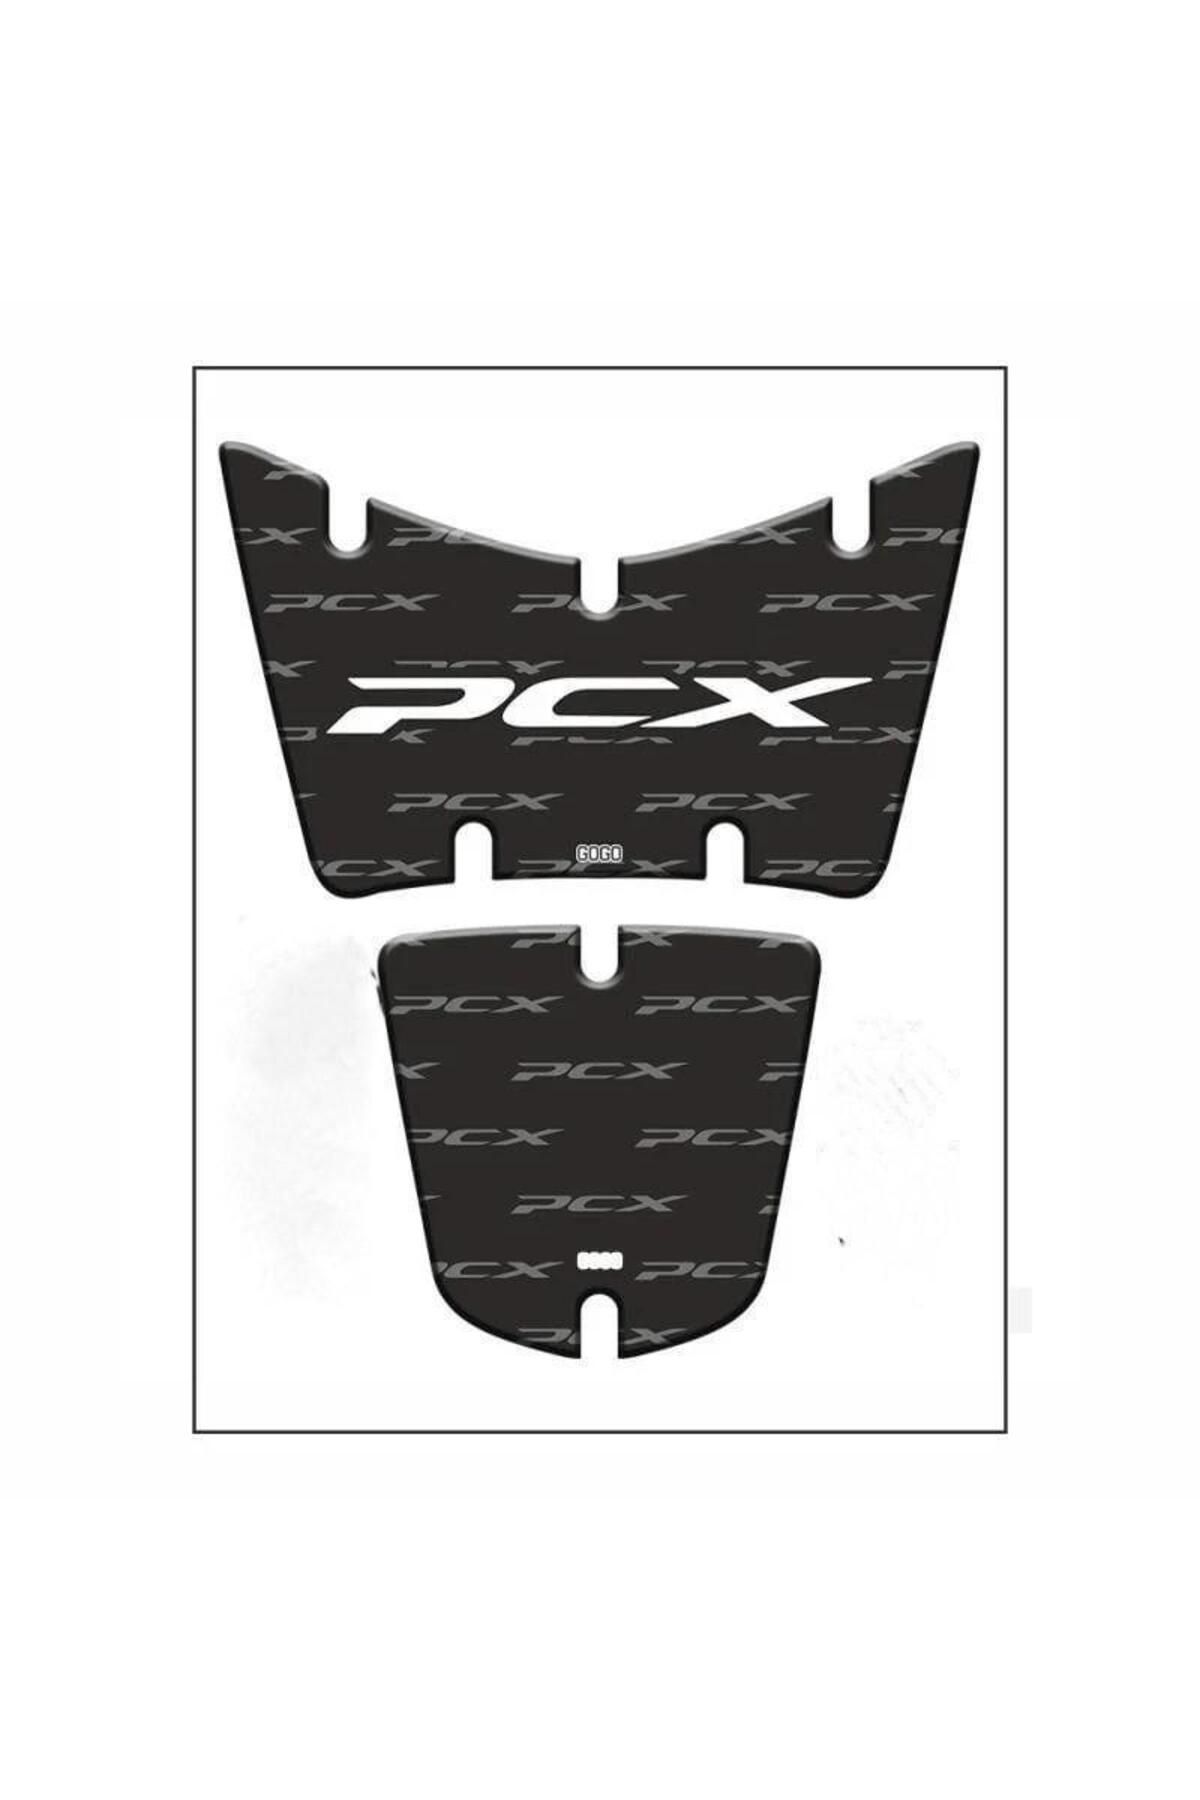 Honda Pcx 2014 - 2017 Tank Pad Set 011